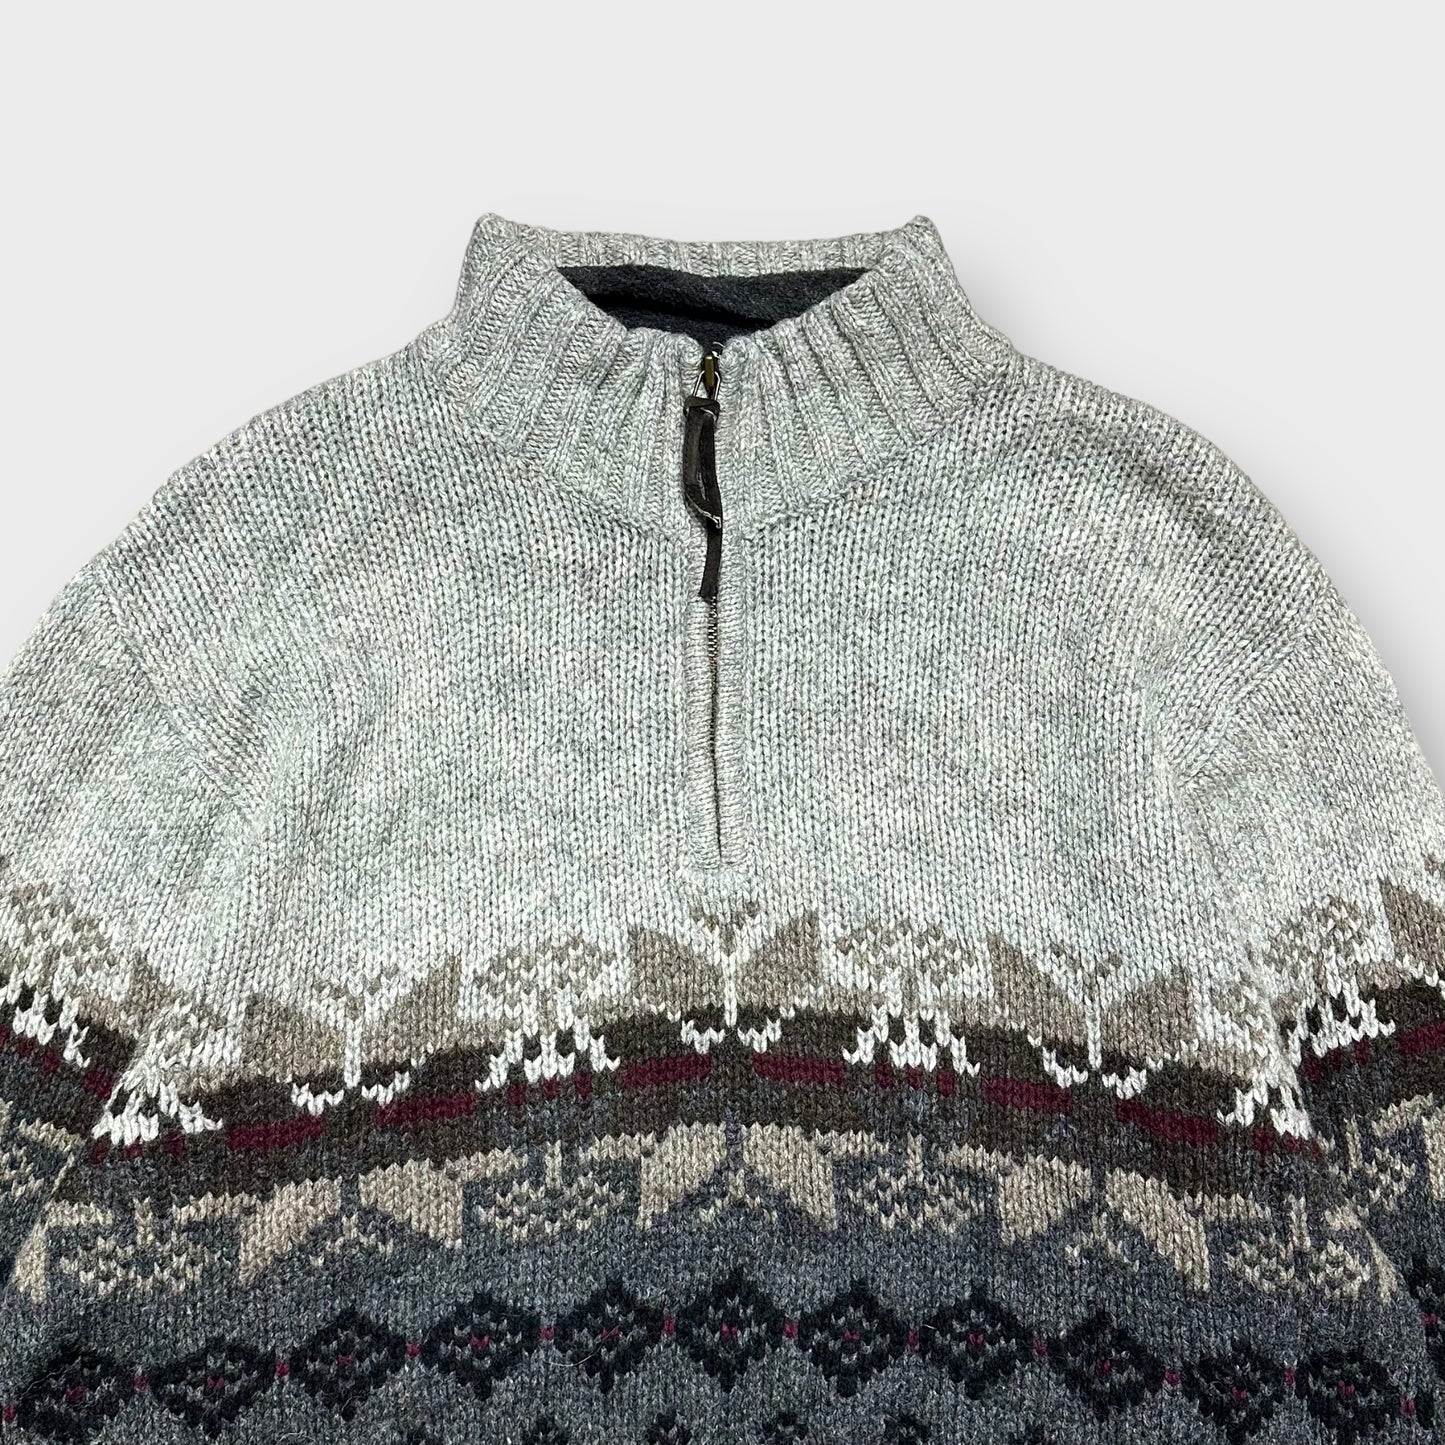 00's "Eddie Bauar" Nordic pattern half zip knit sweater